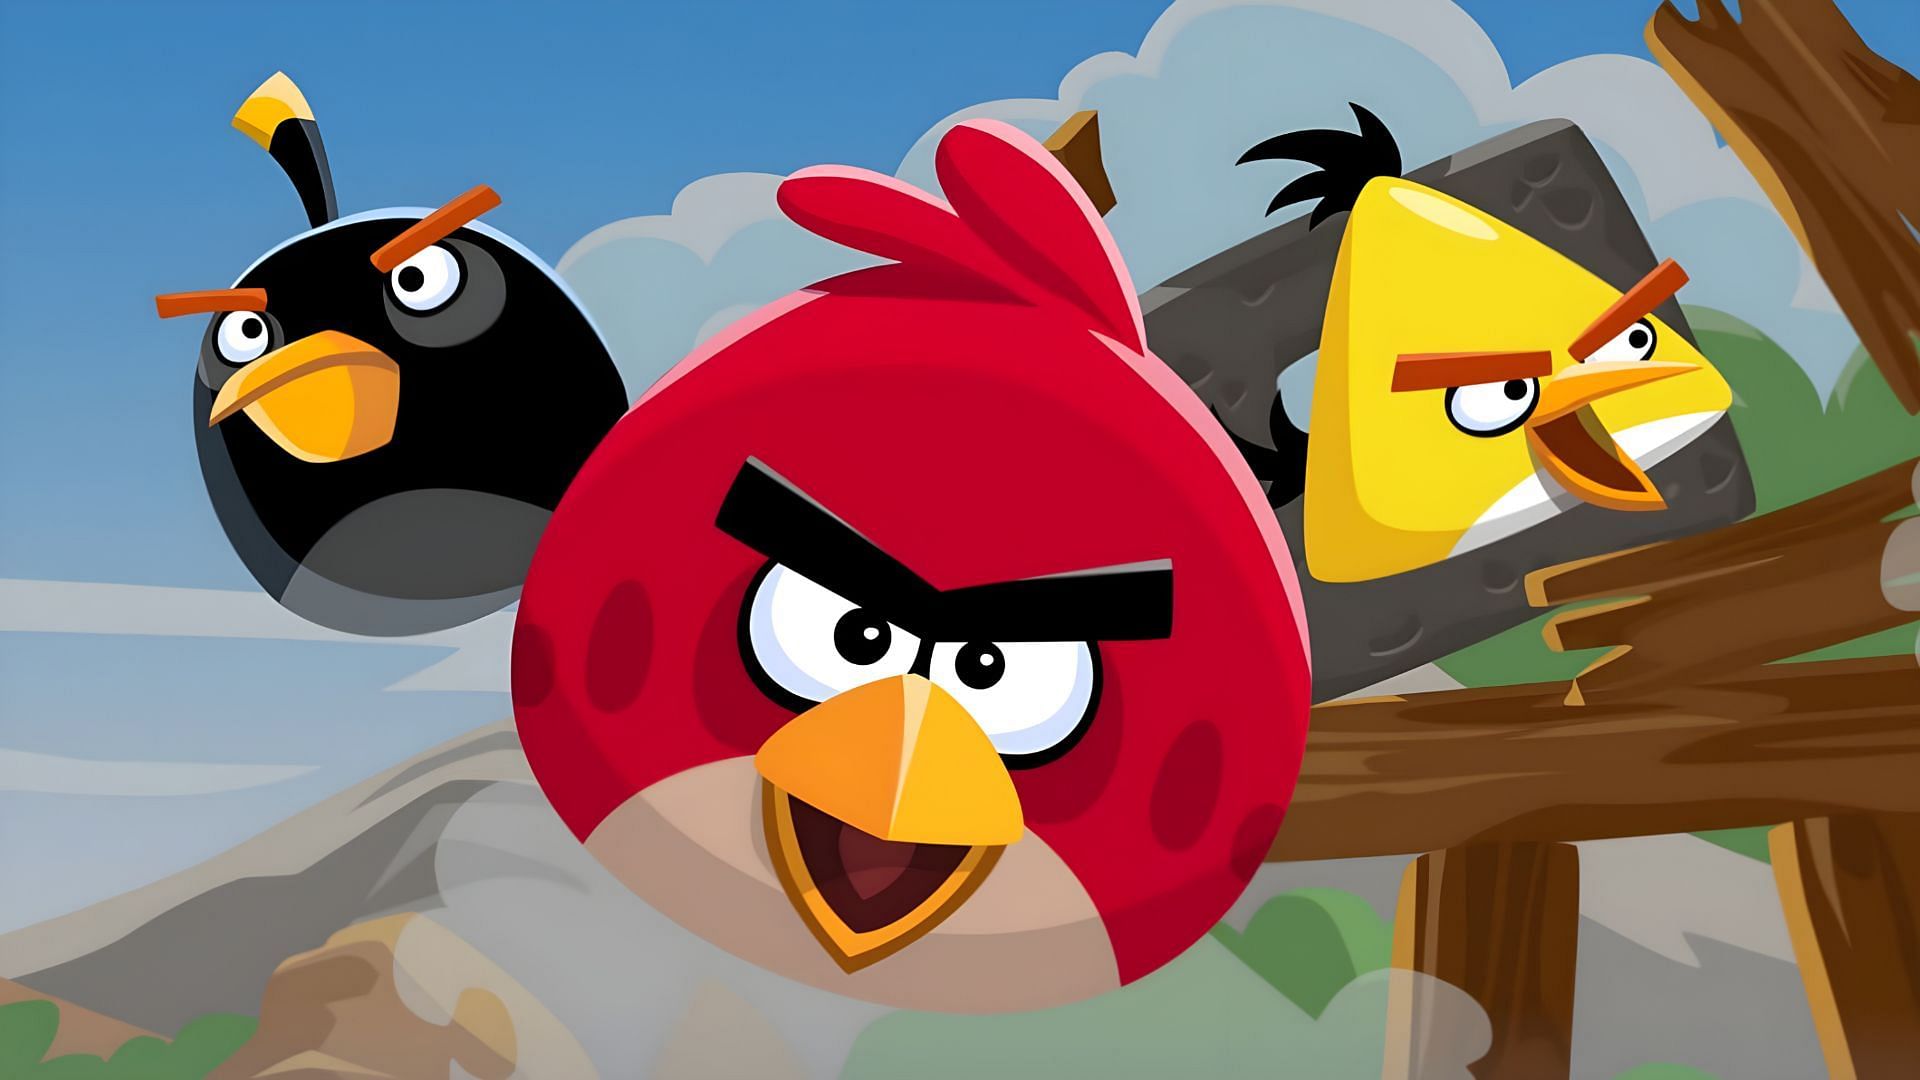 Sega is reportedly close to acquiring Rovio, the studio behind Angry Birds games, for $1 billion (Image via Rovio)